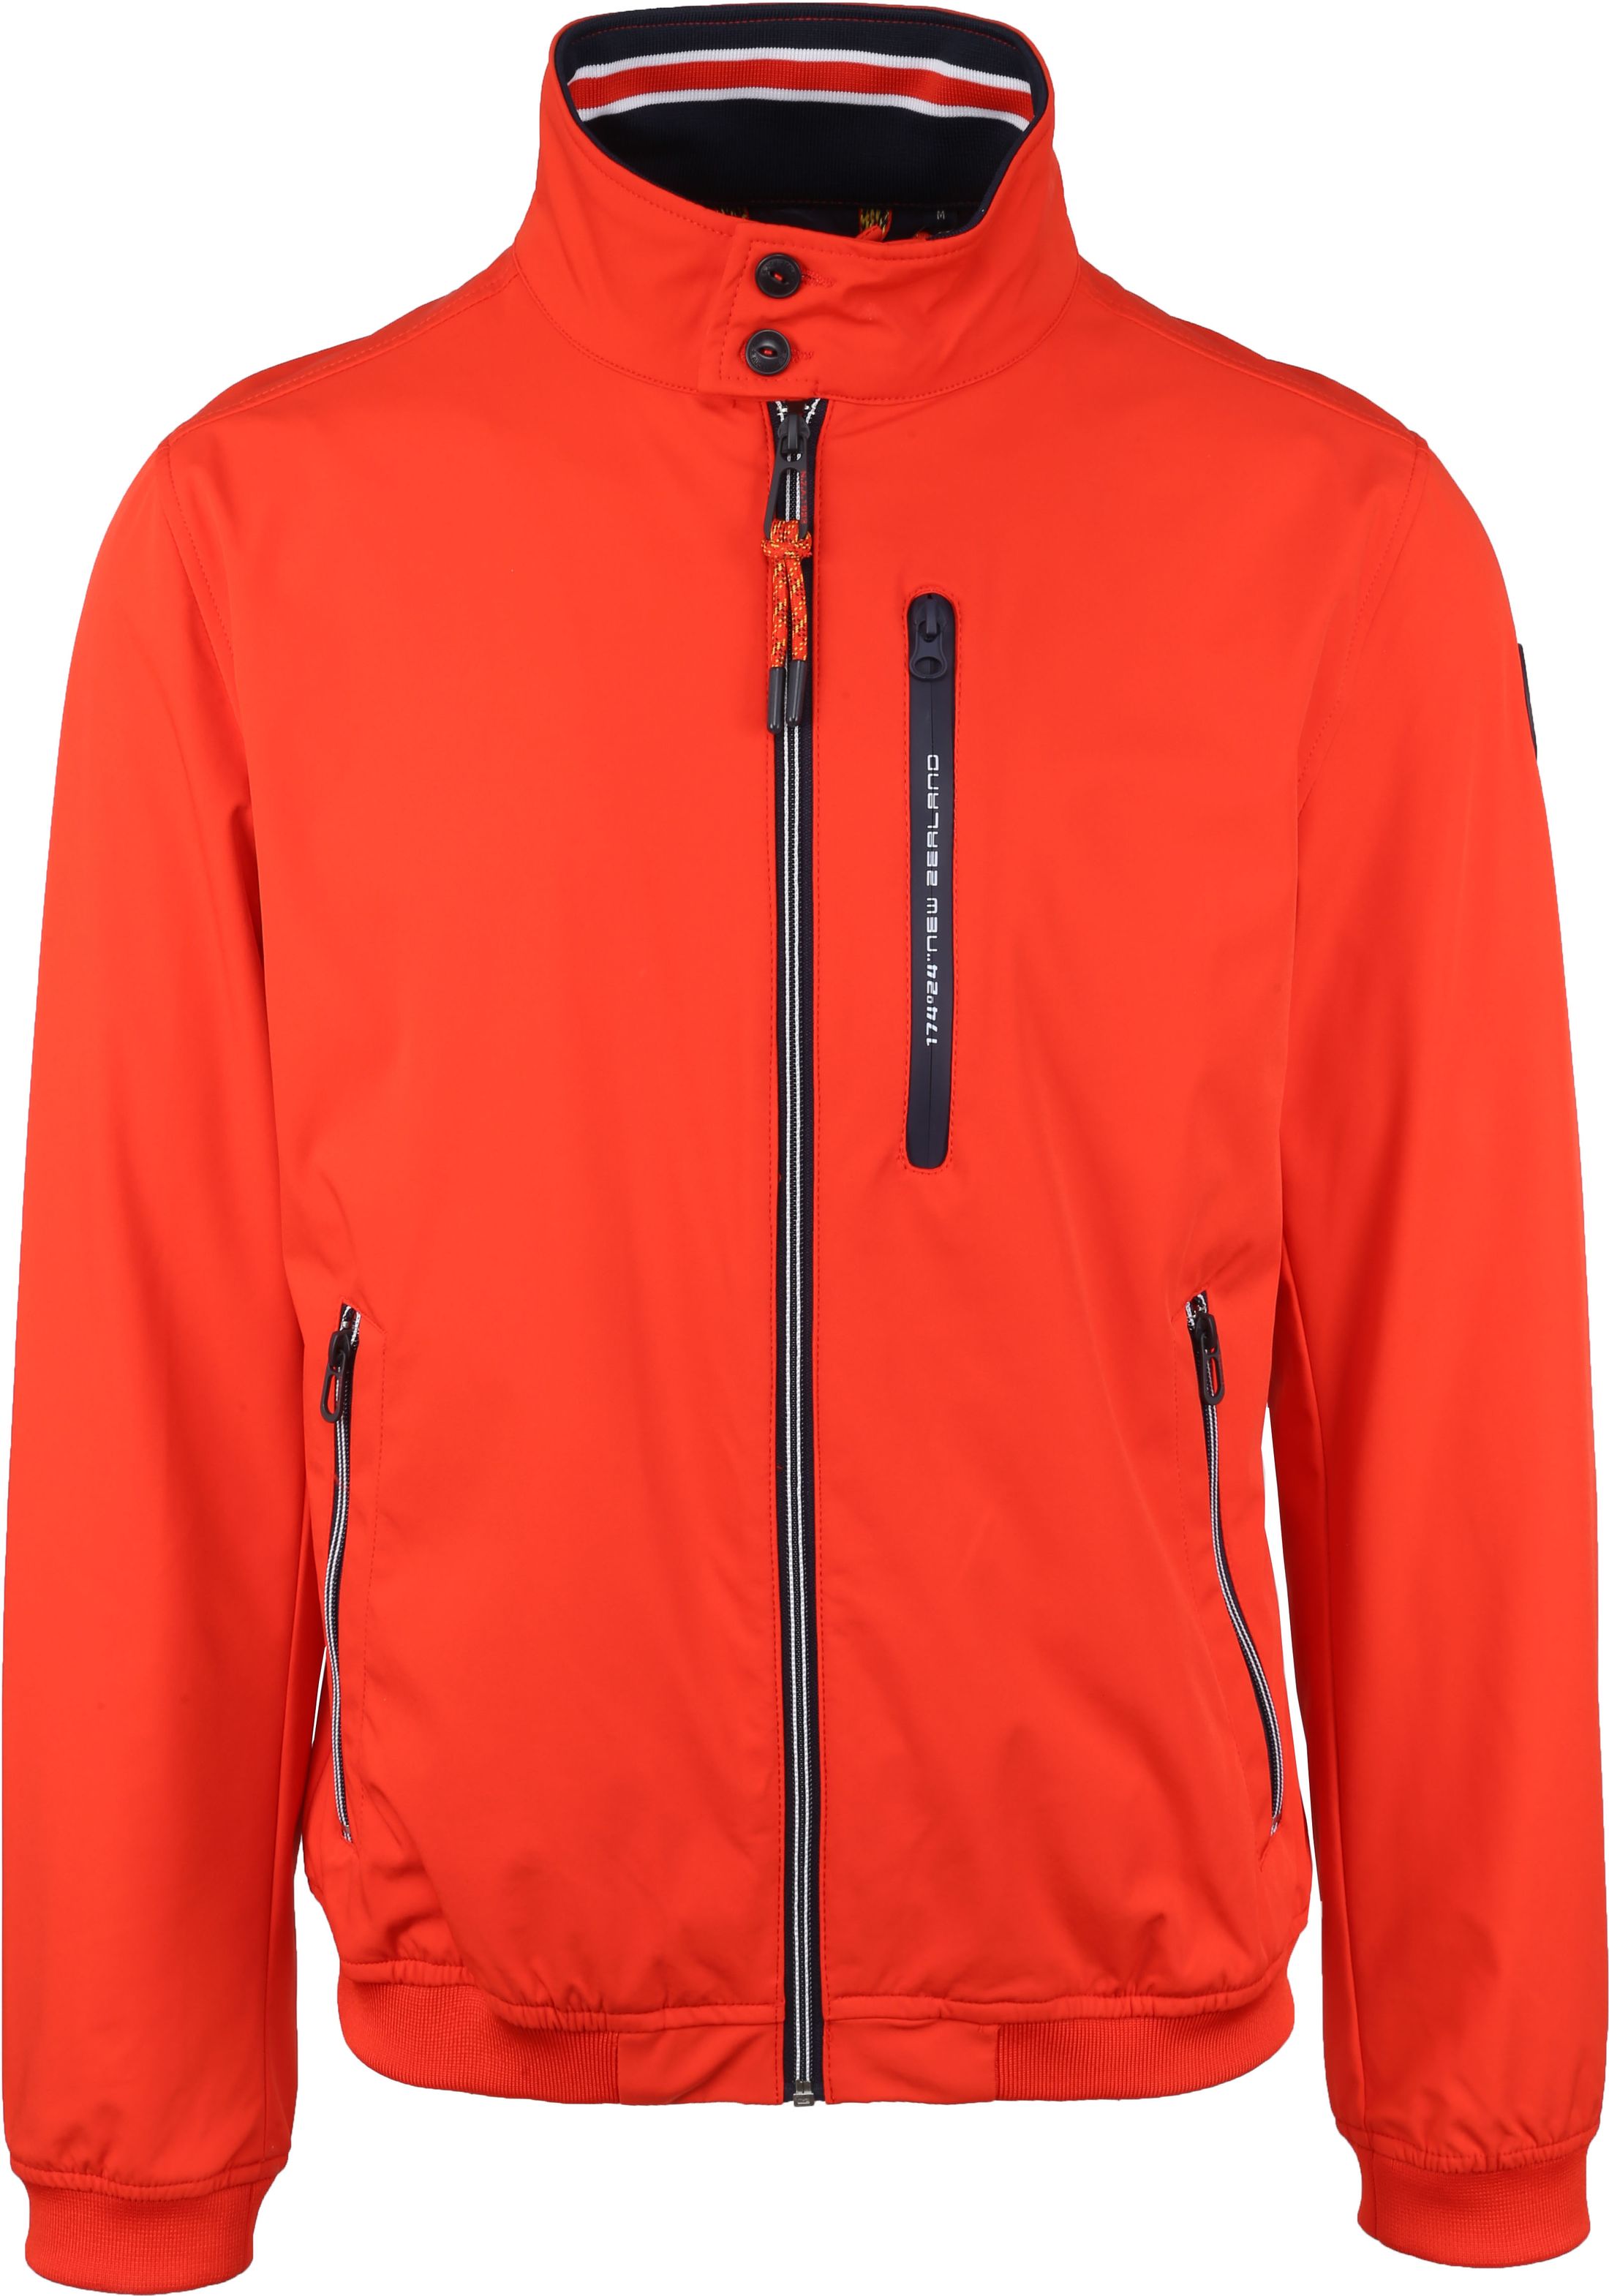 NZA Motueka Jacket Orange Red size L